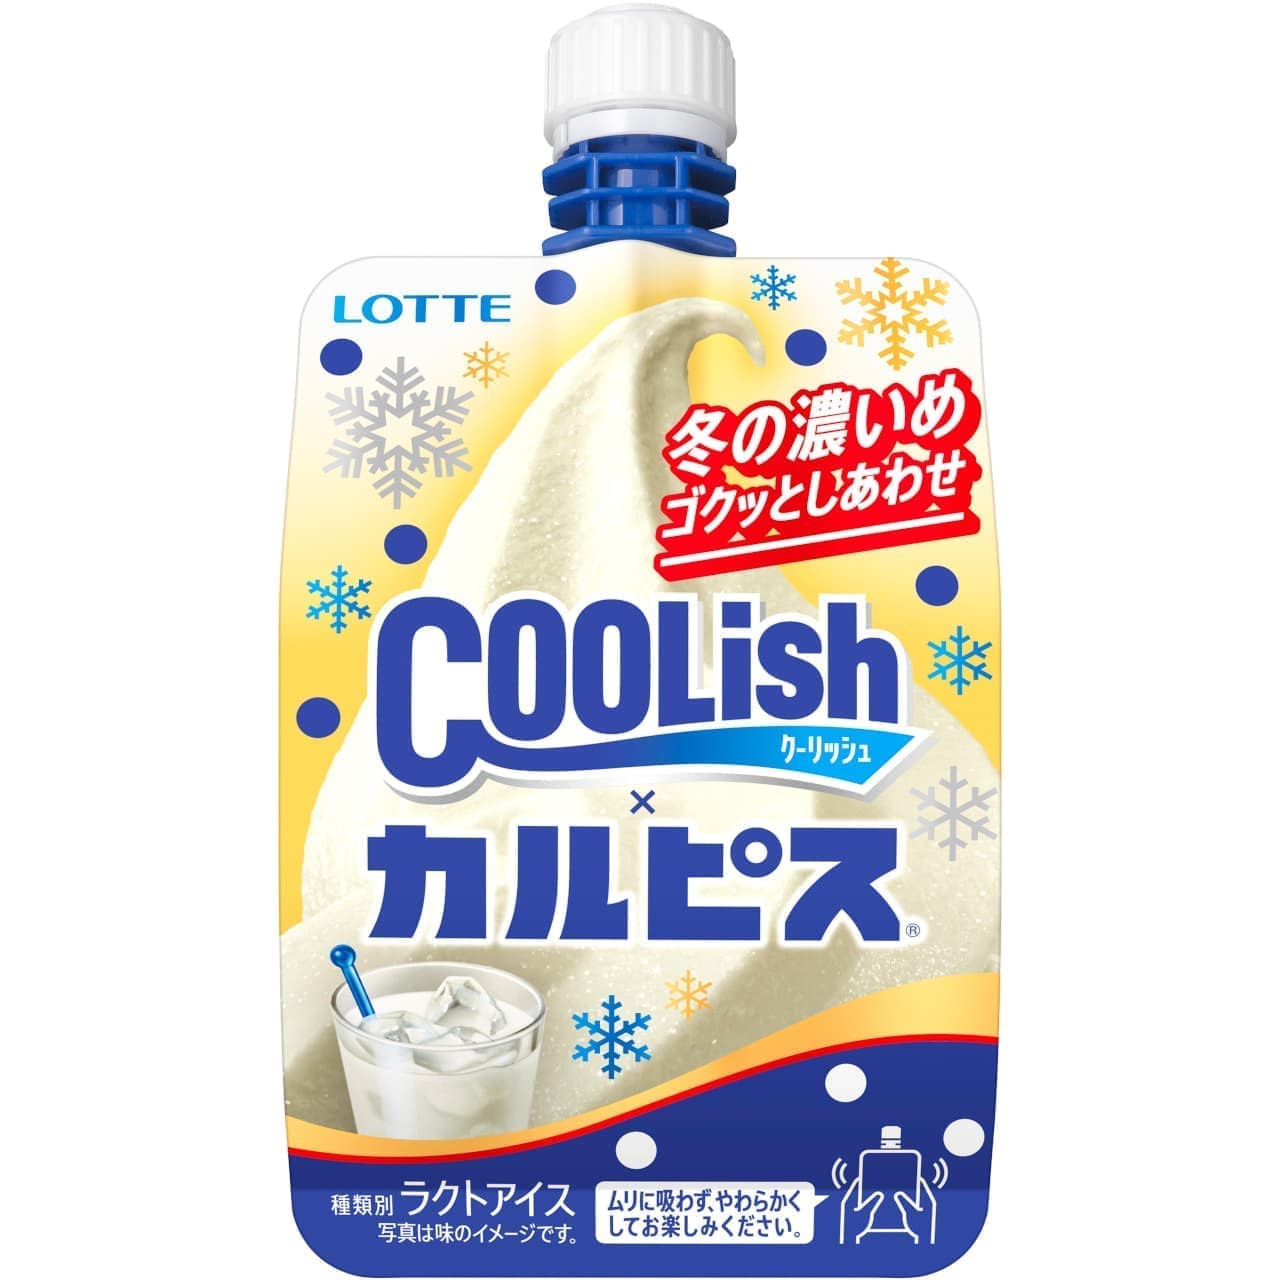 Lotte "Coolish Vanilla [Winter Darkness]" etc.